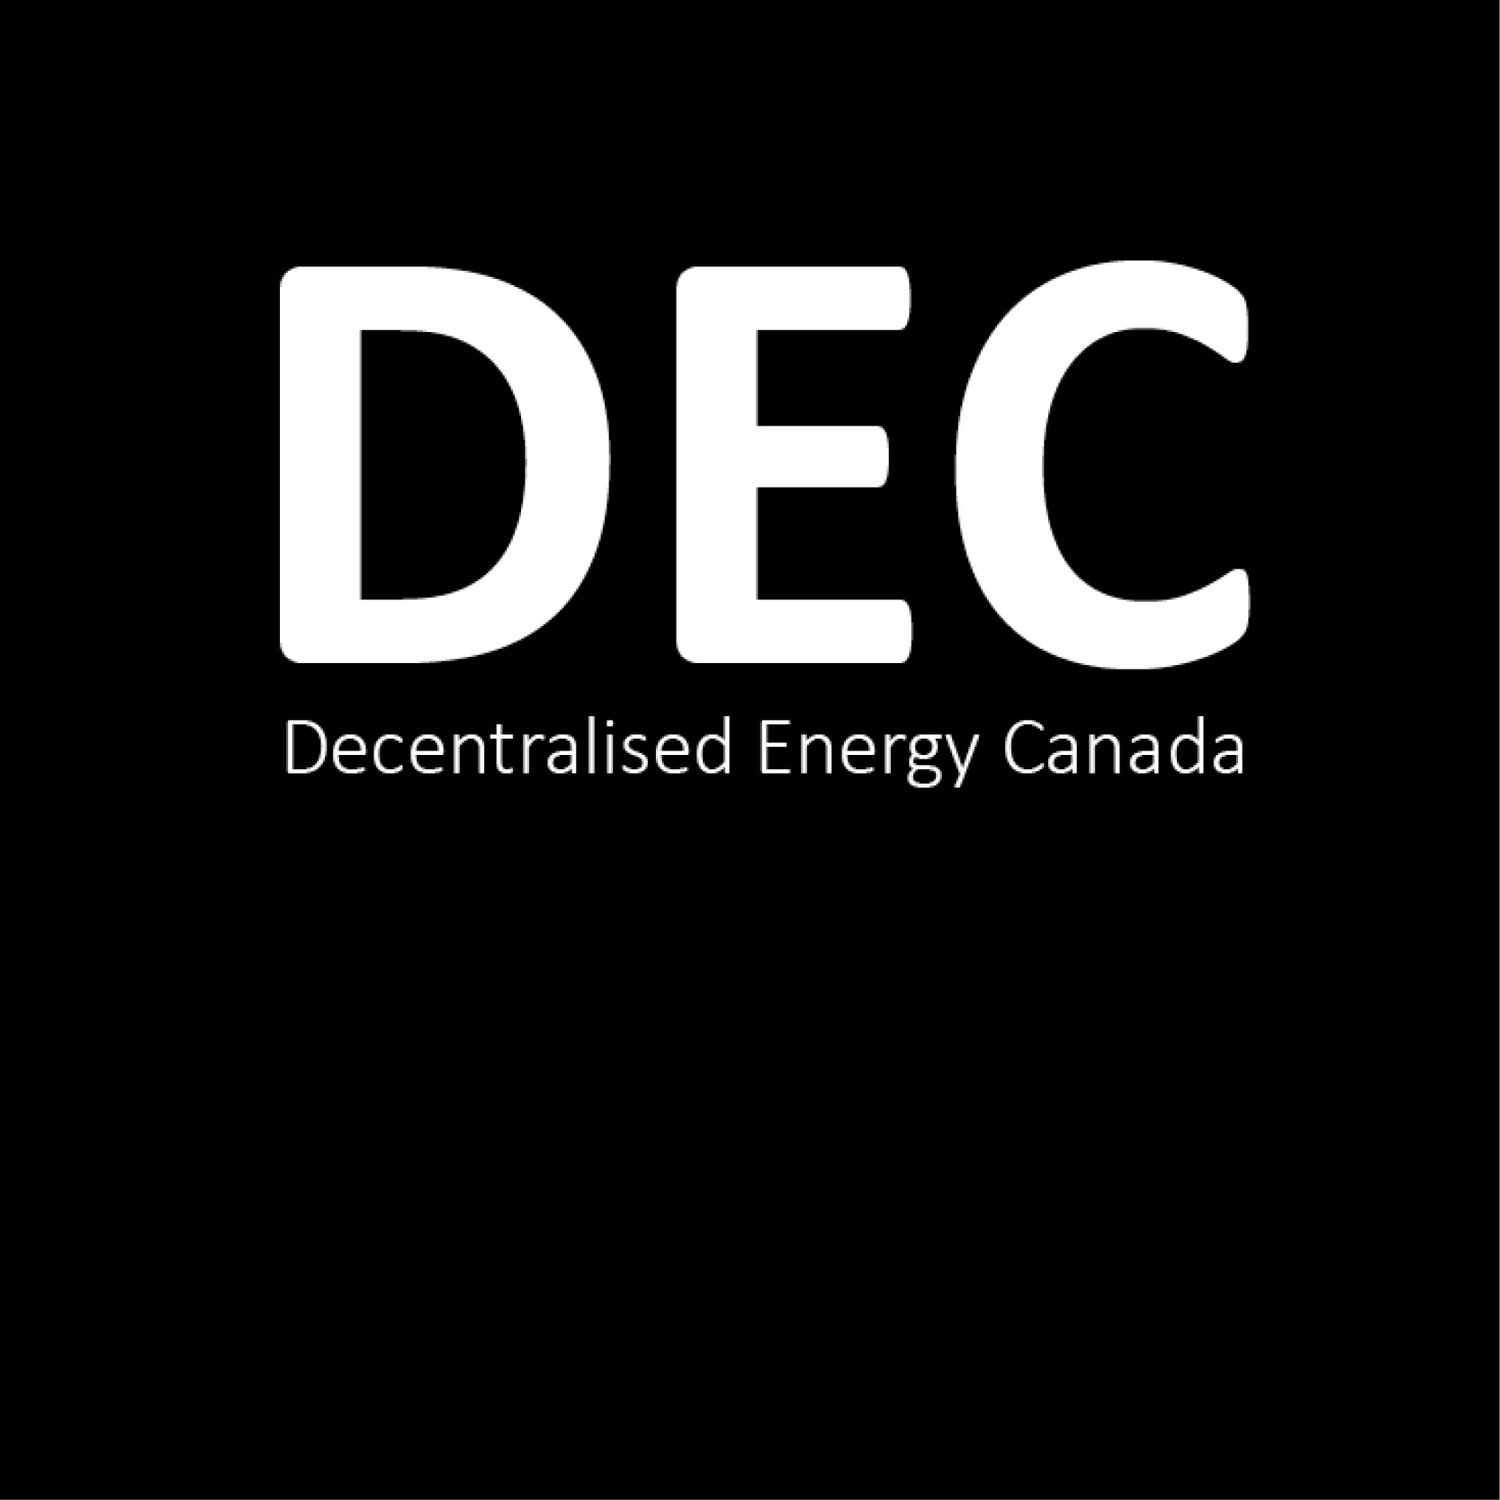 Decentralised Energy Canada